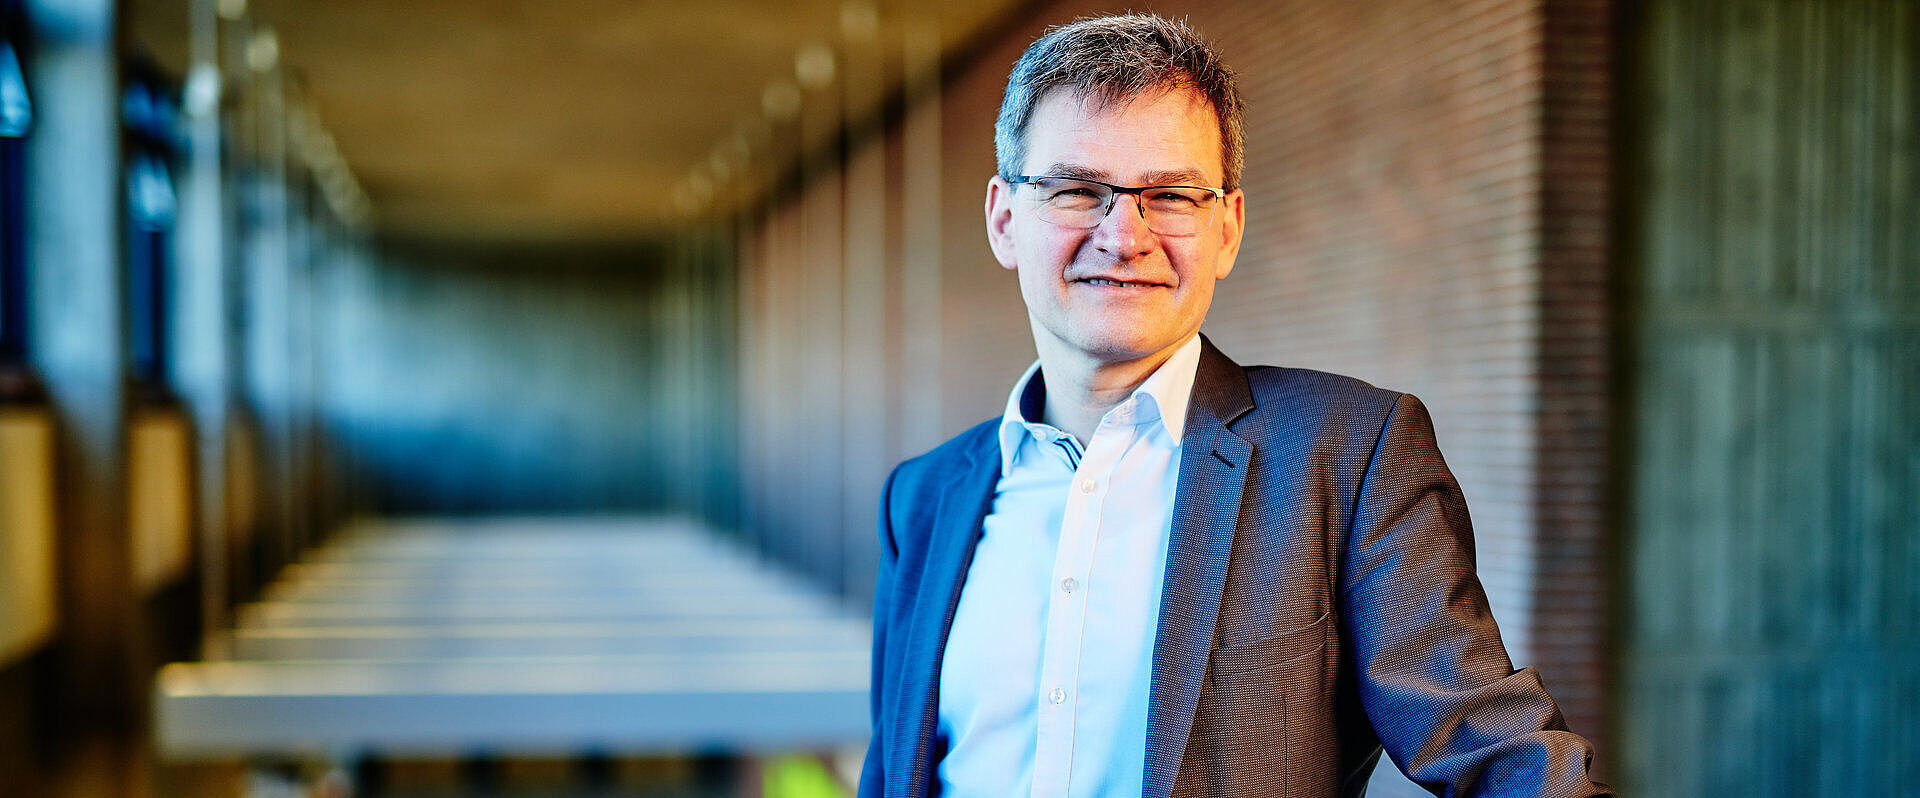 Prof. Dr.-Ing. habil. Stephan Völker, Vizepräsident für Forschung und Berufung